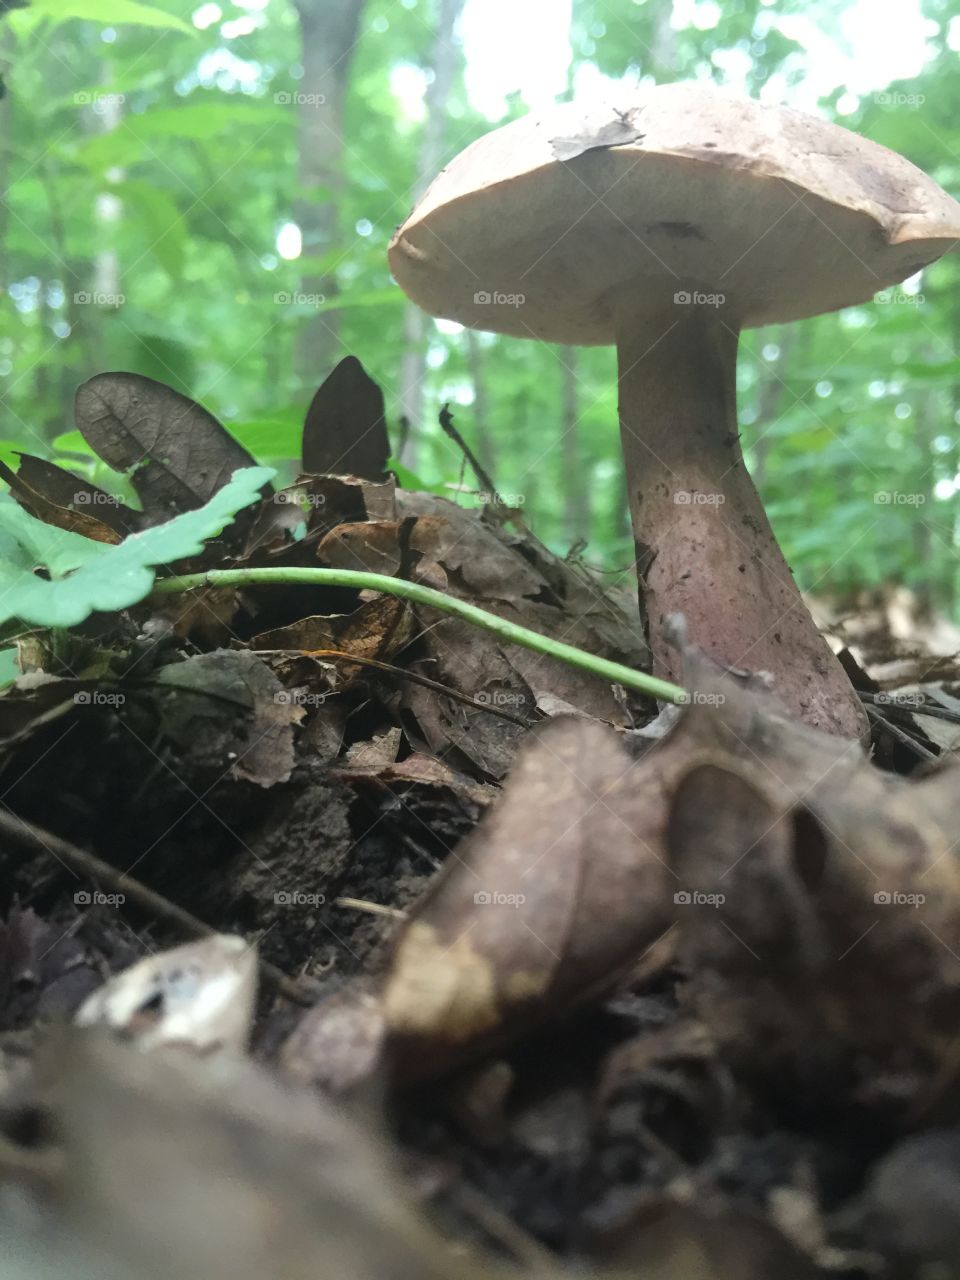 Up close mushroom